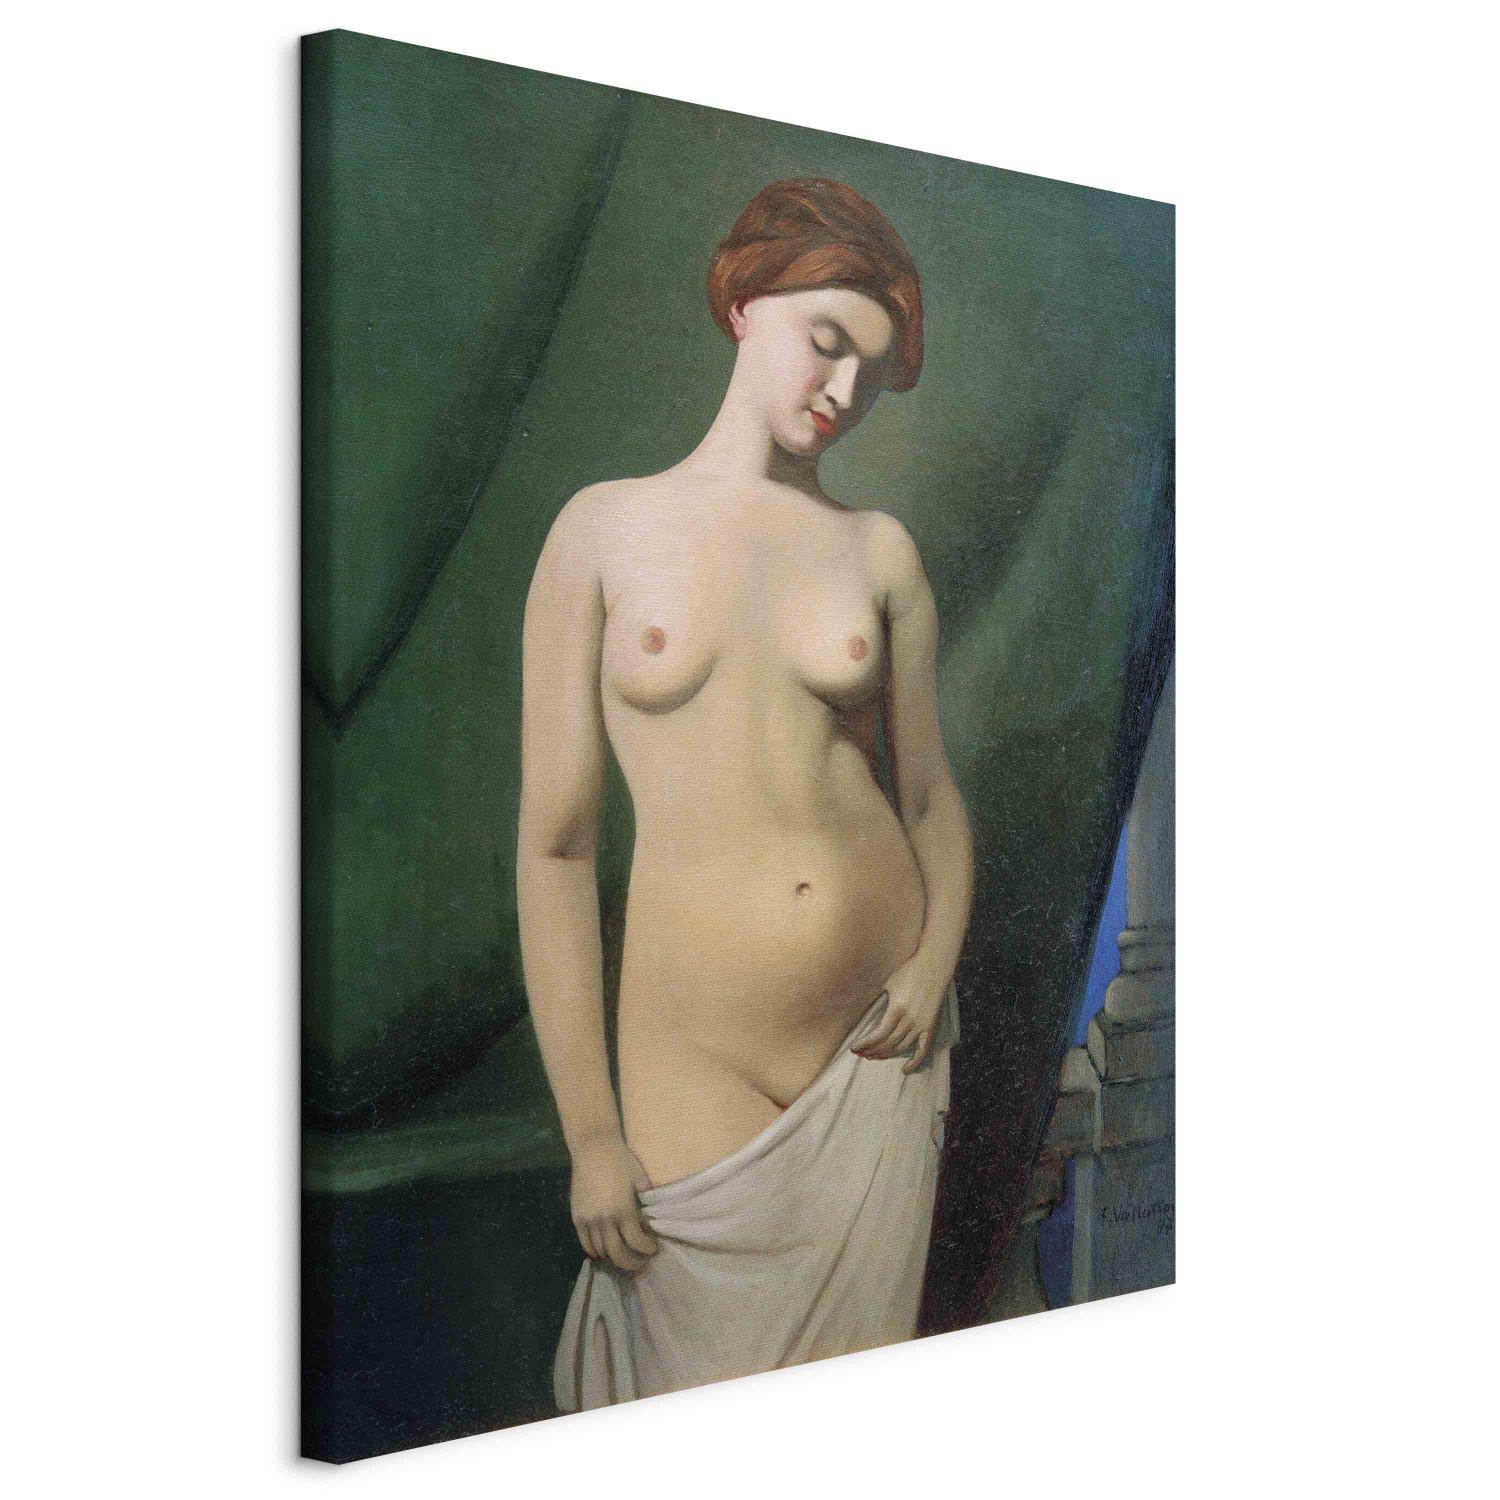 Cuadro famoso Femmes nue, rideau vert